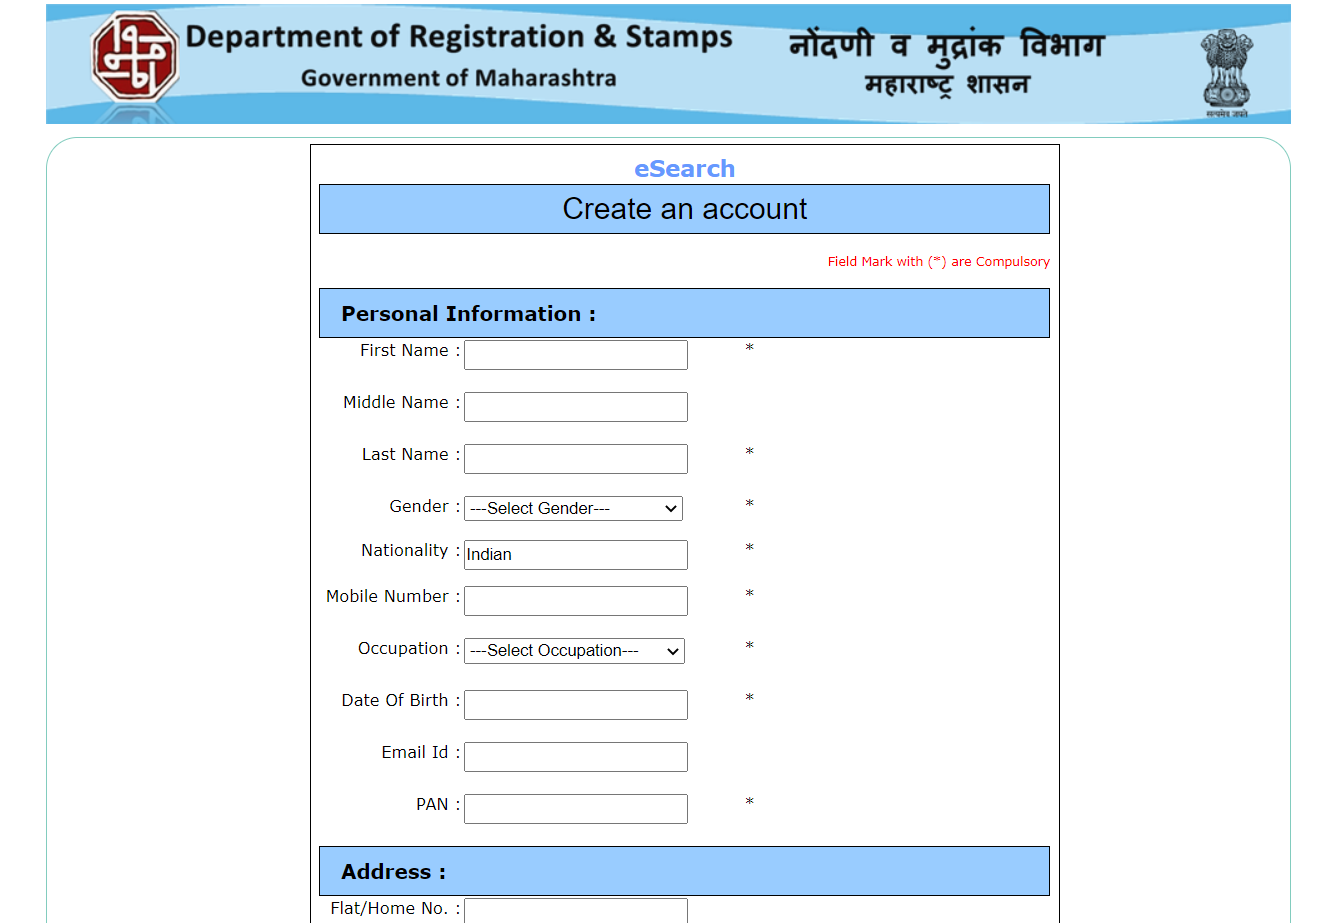 Department of registration